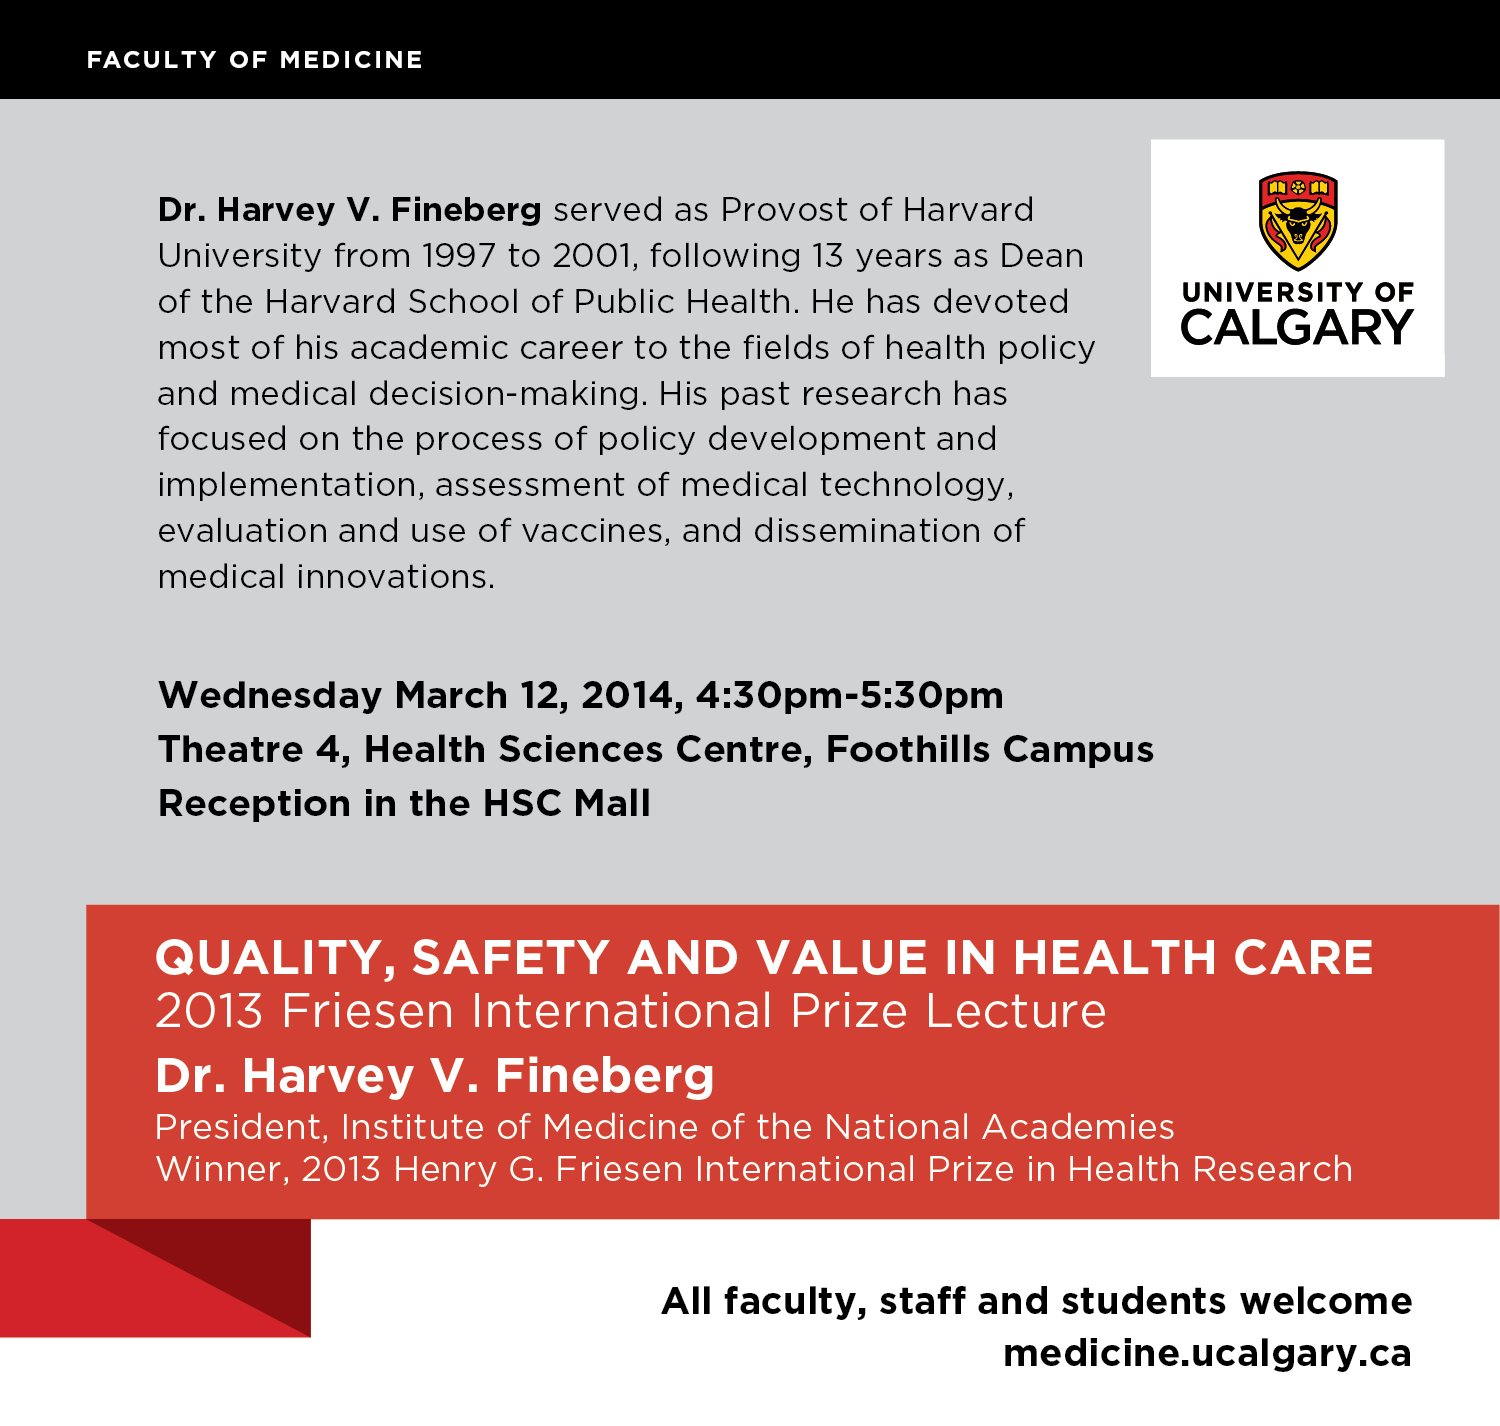 U Calgary - Institutional visit - Fineberg - March 11-12, 2014